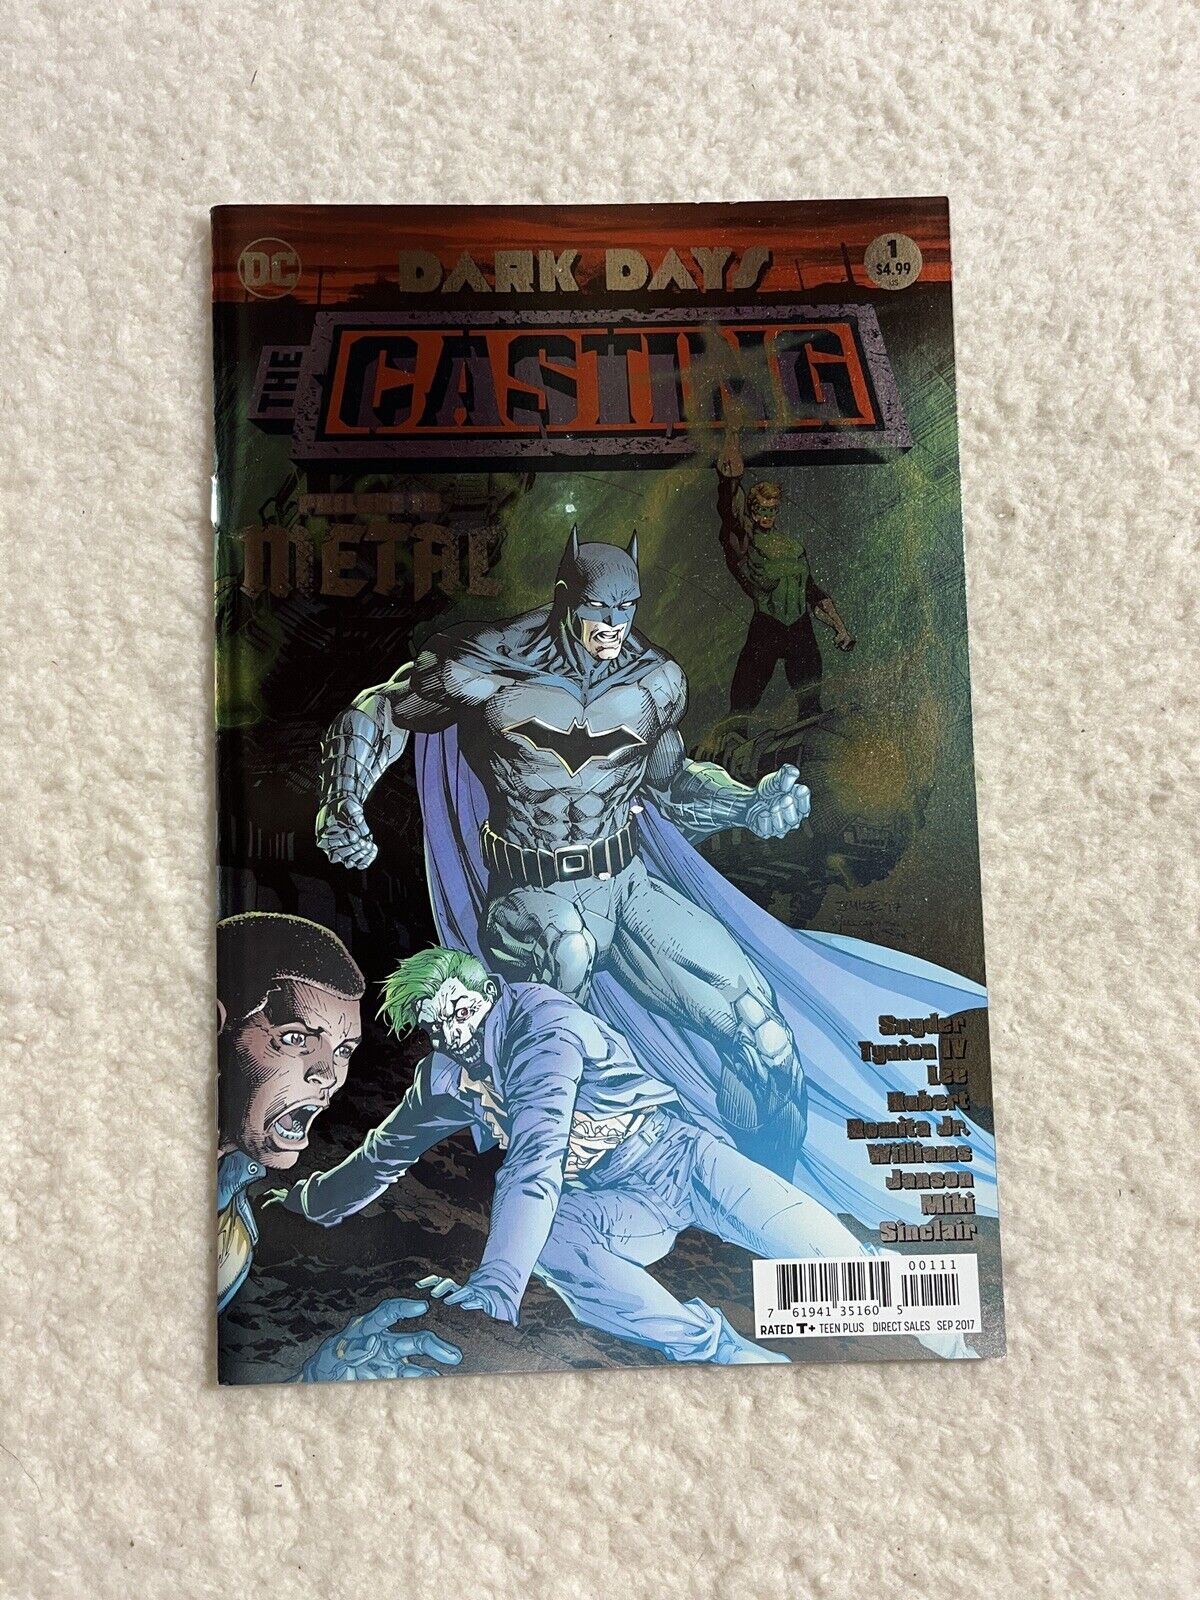 Dark Days The Casting #1 Foil Cover DC Comics 2017 Jim Lee Batman